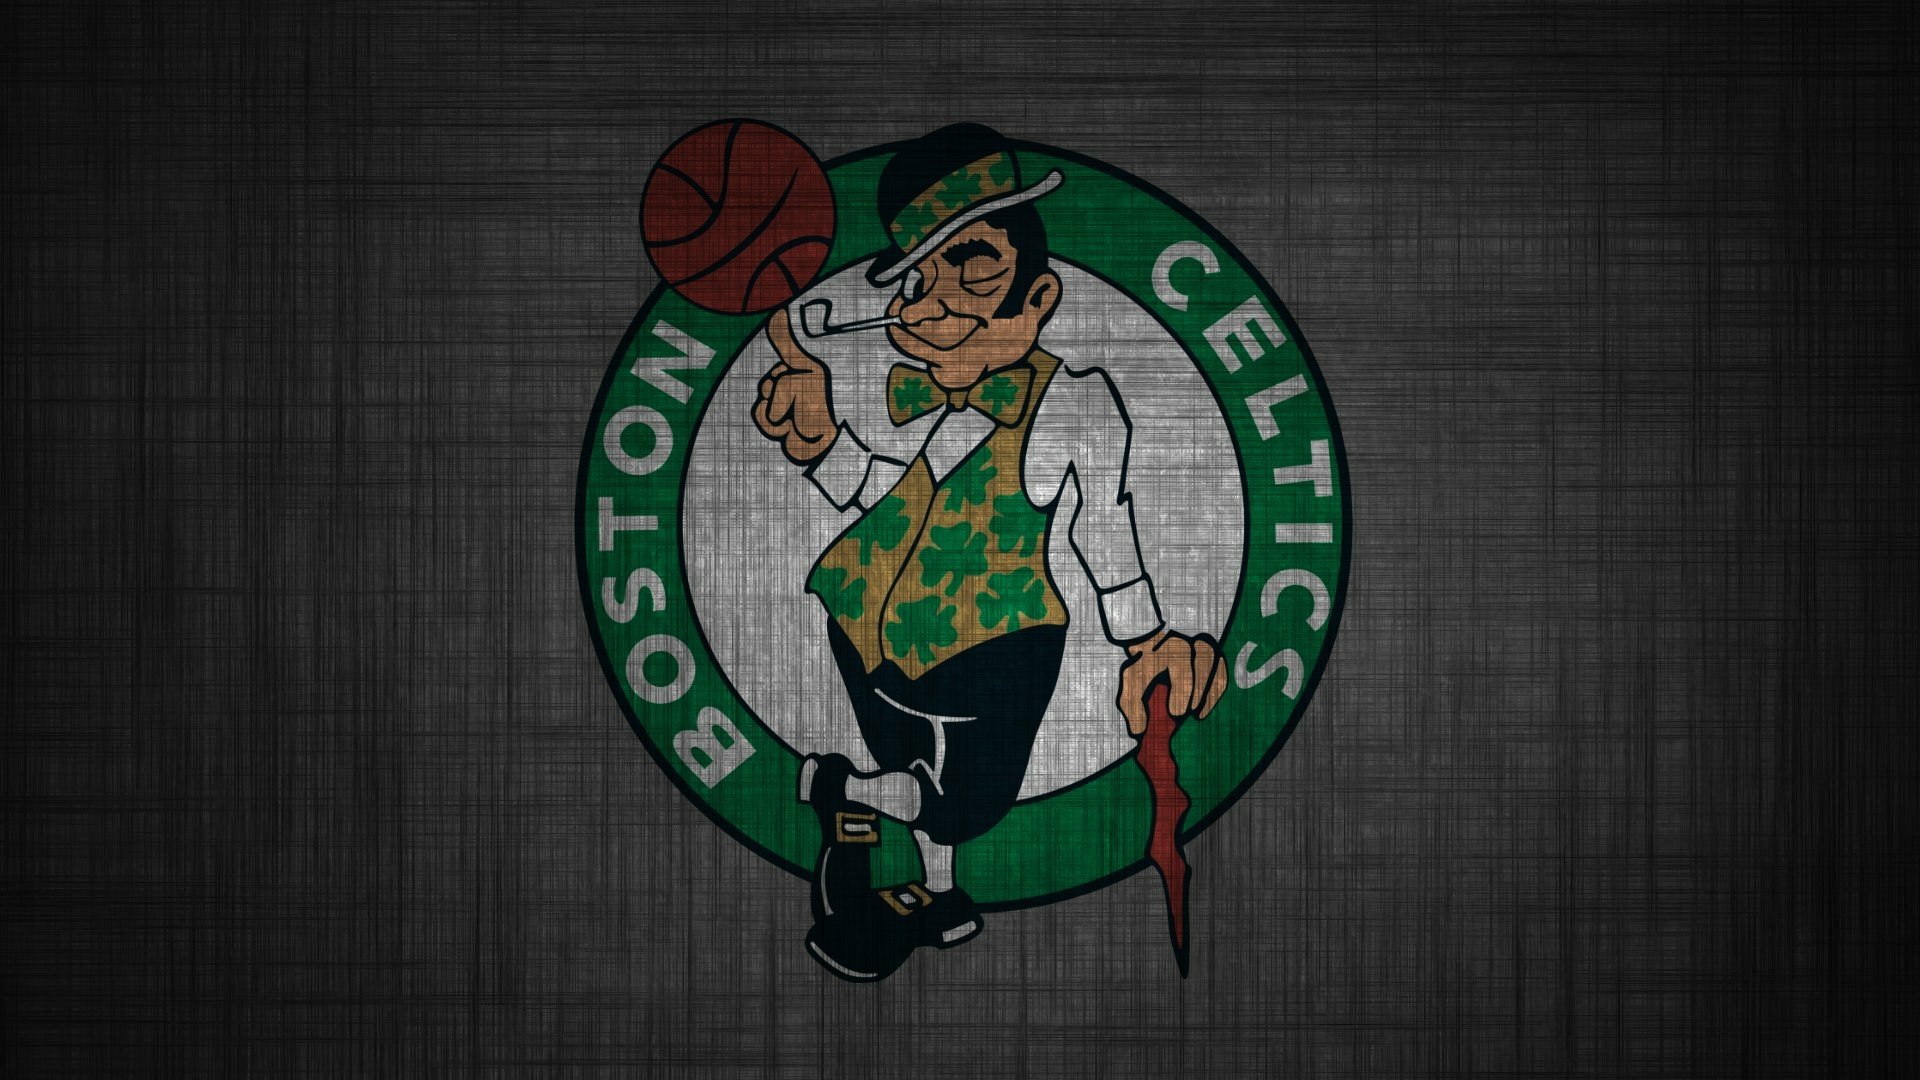 1920x1080 Boston Celtics Wallpaper Background Image. 